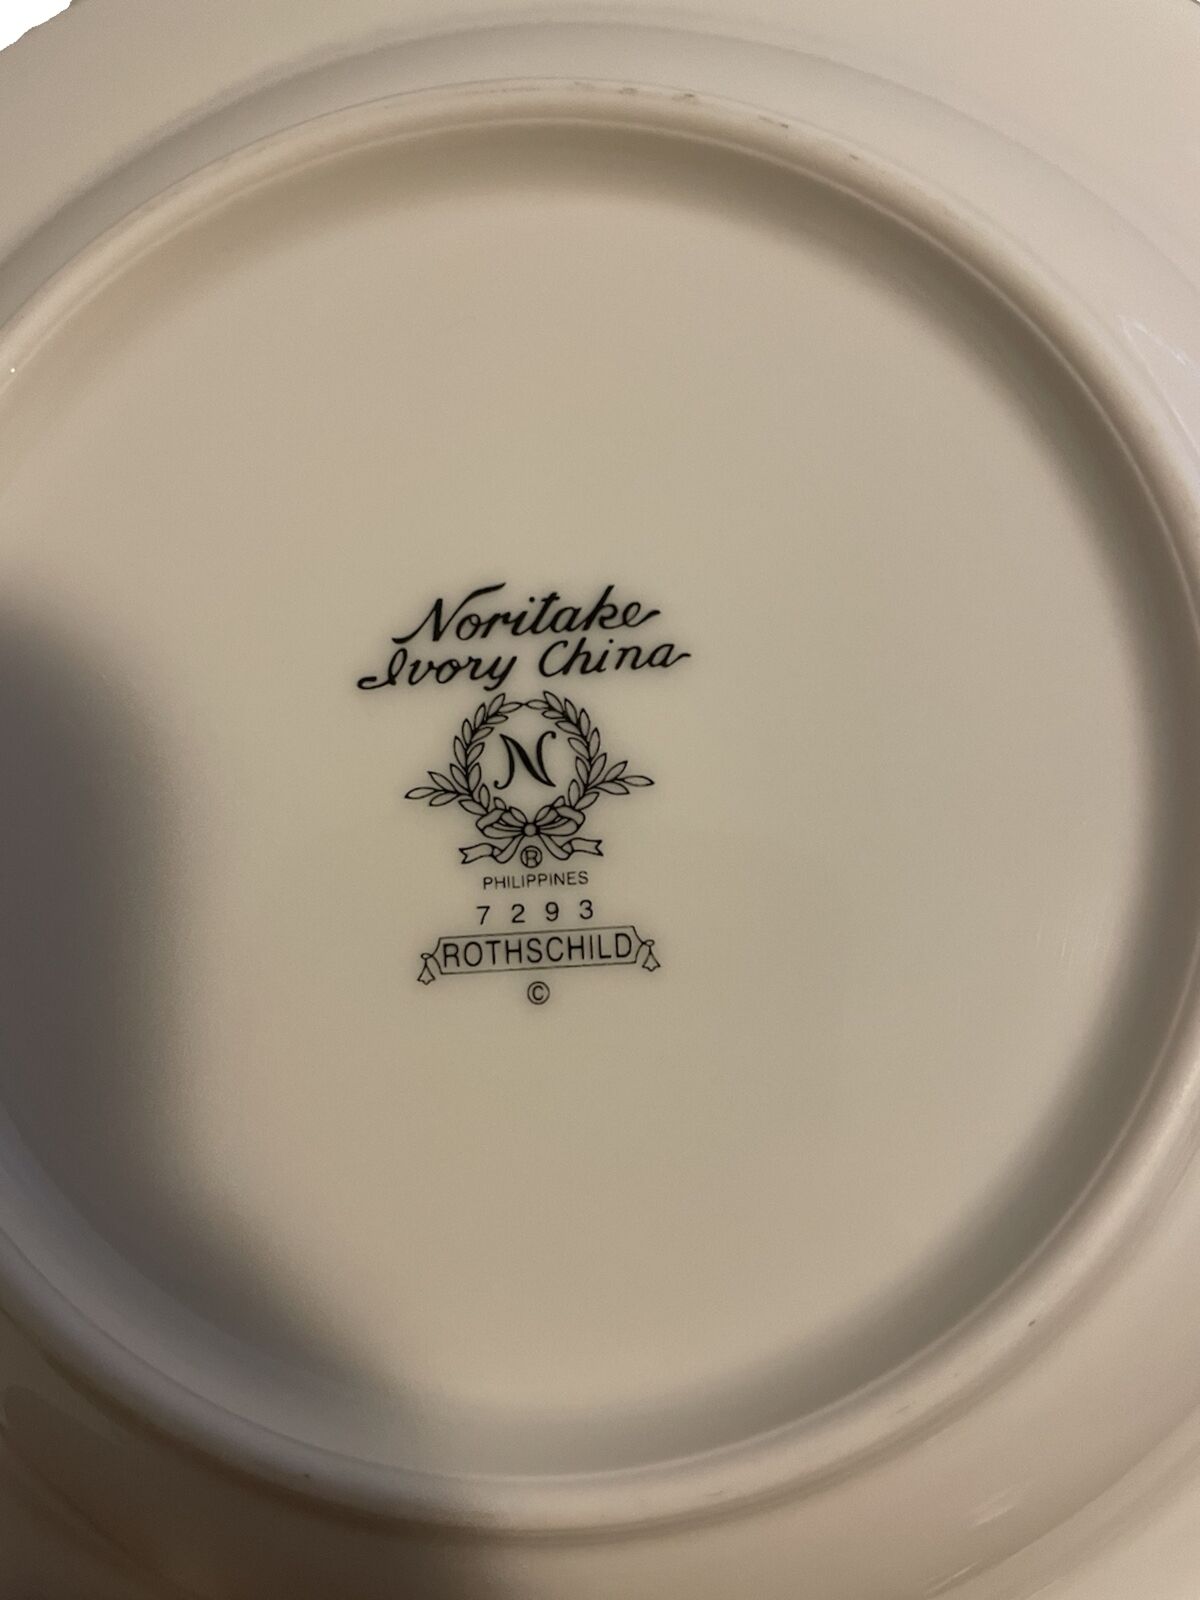 Noritake ivory china rothschild 7293 Bowls. Mint Condition.